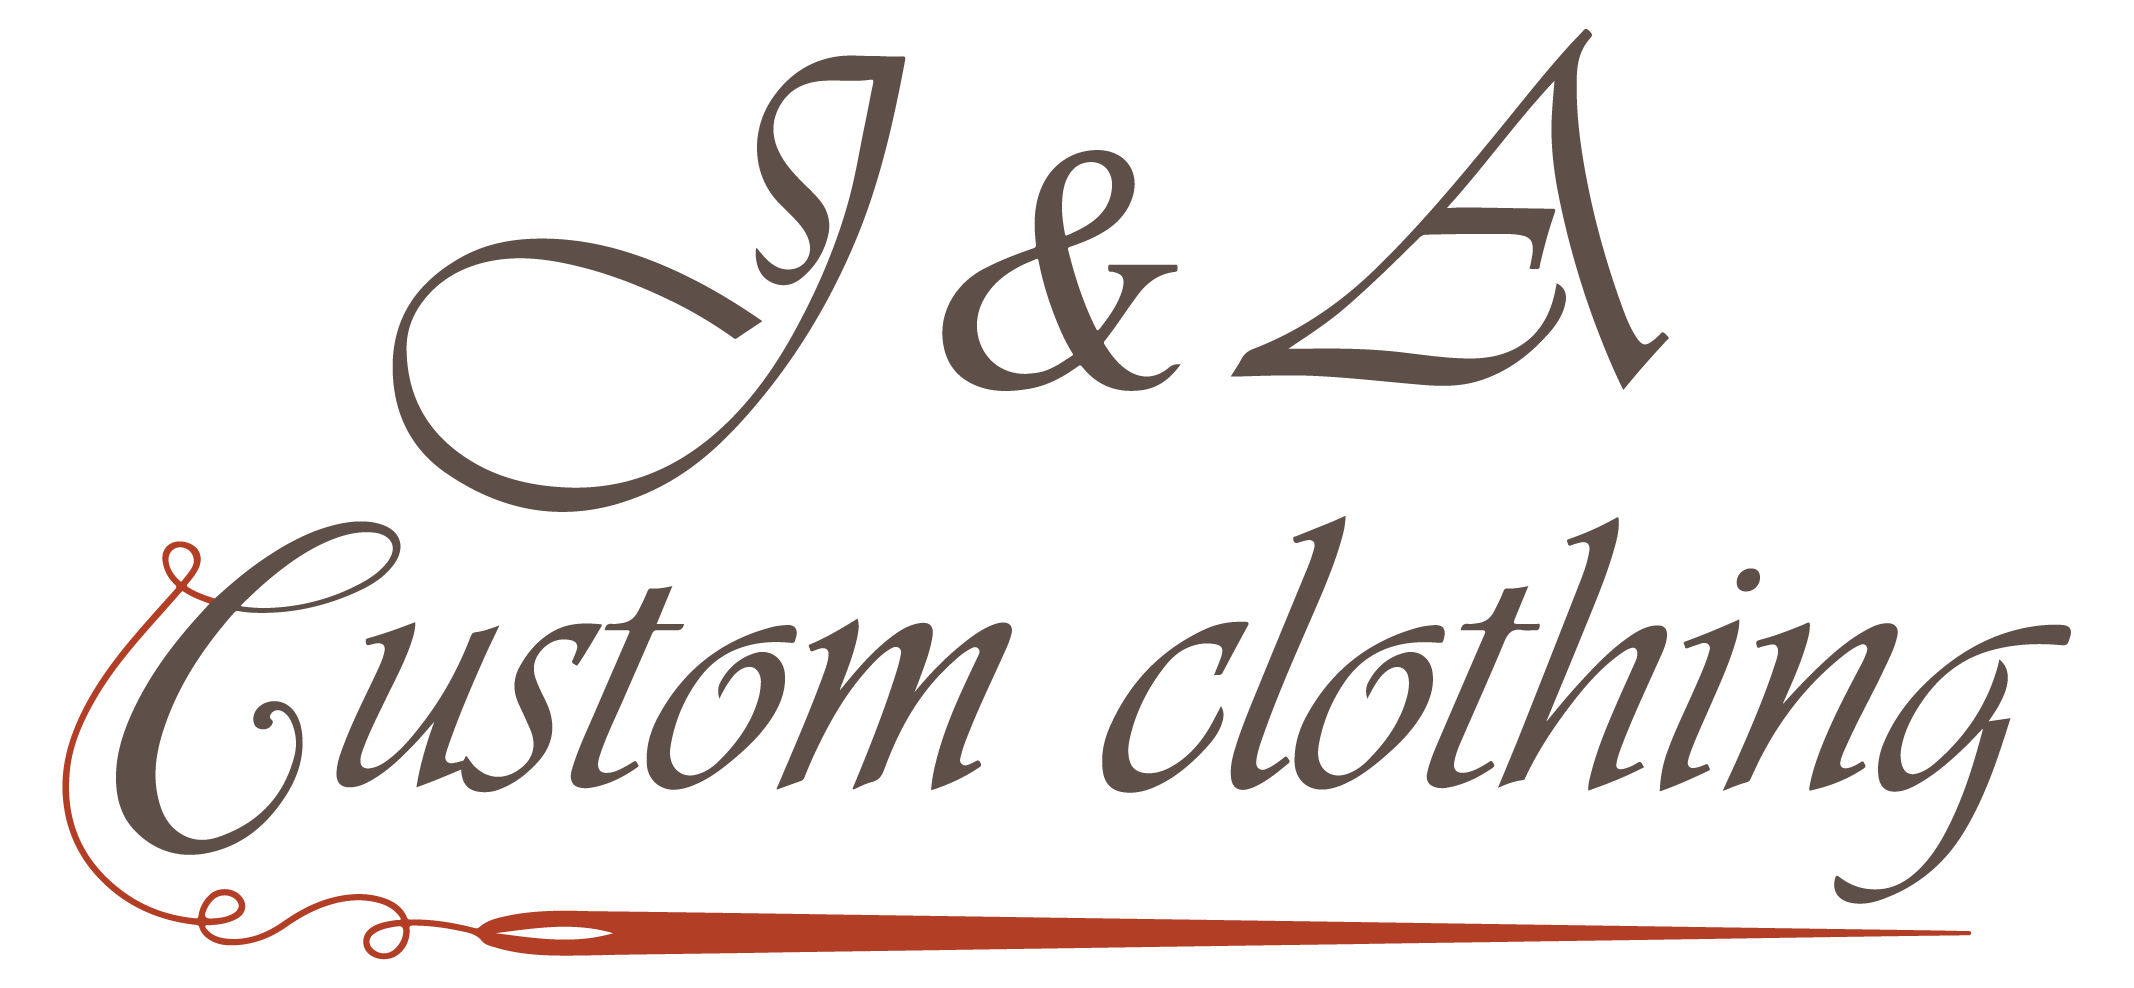 j&a custom clothing logo